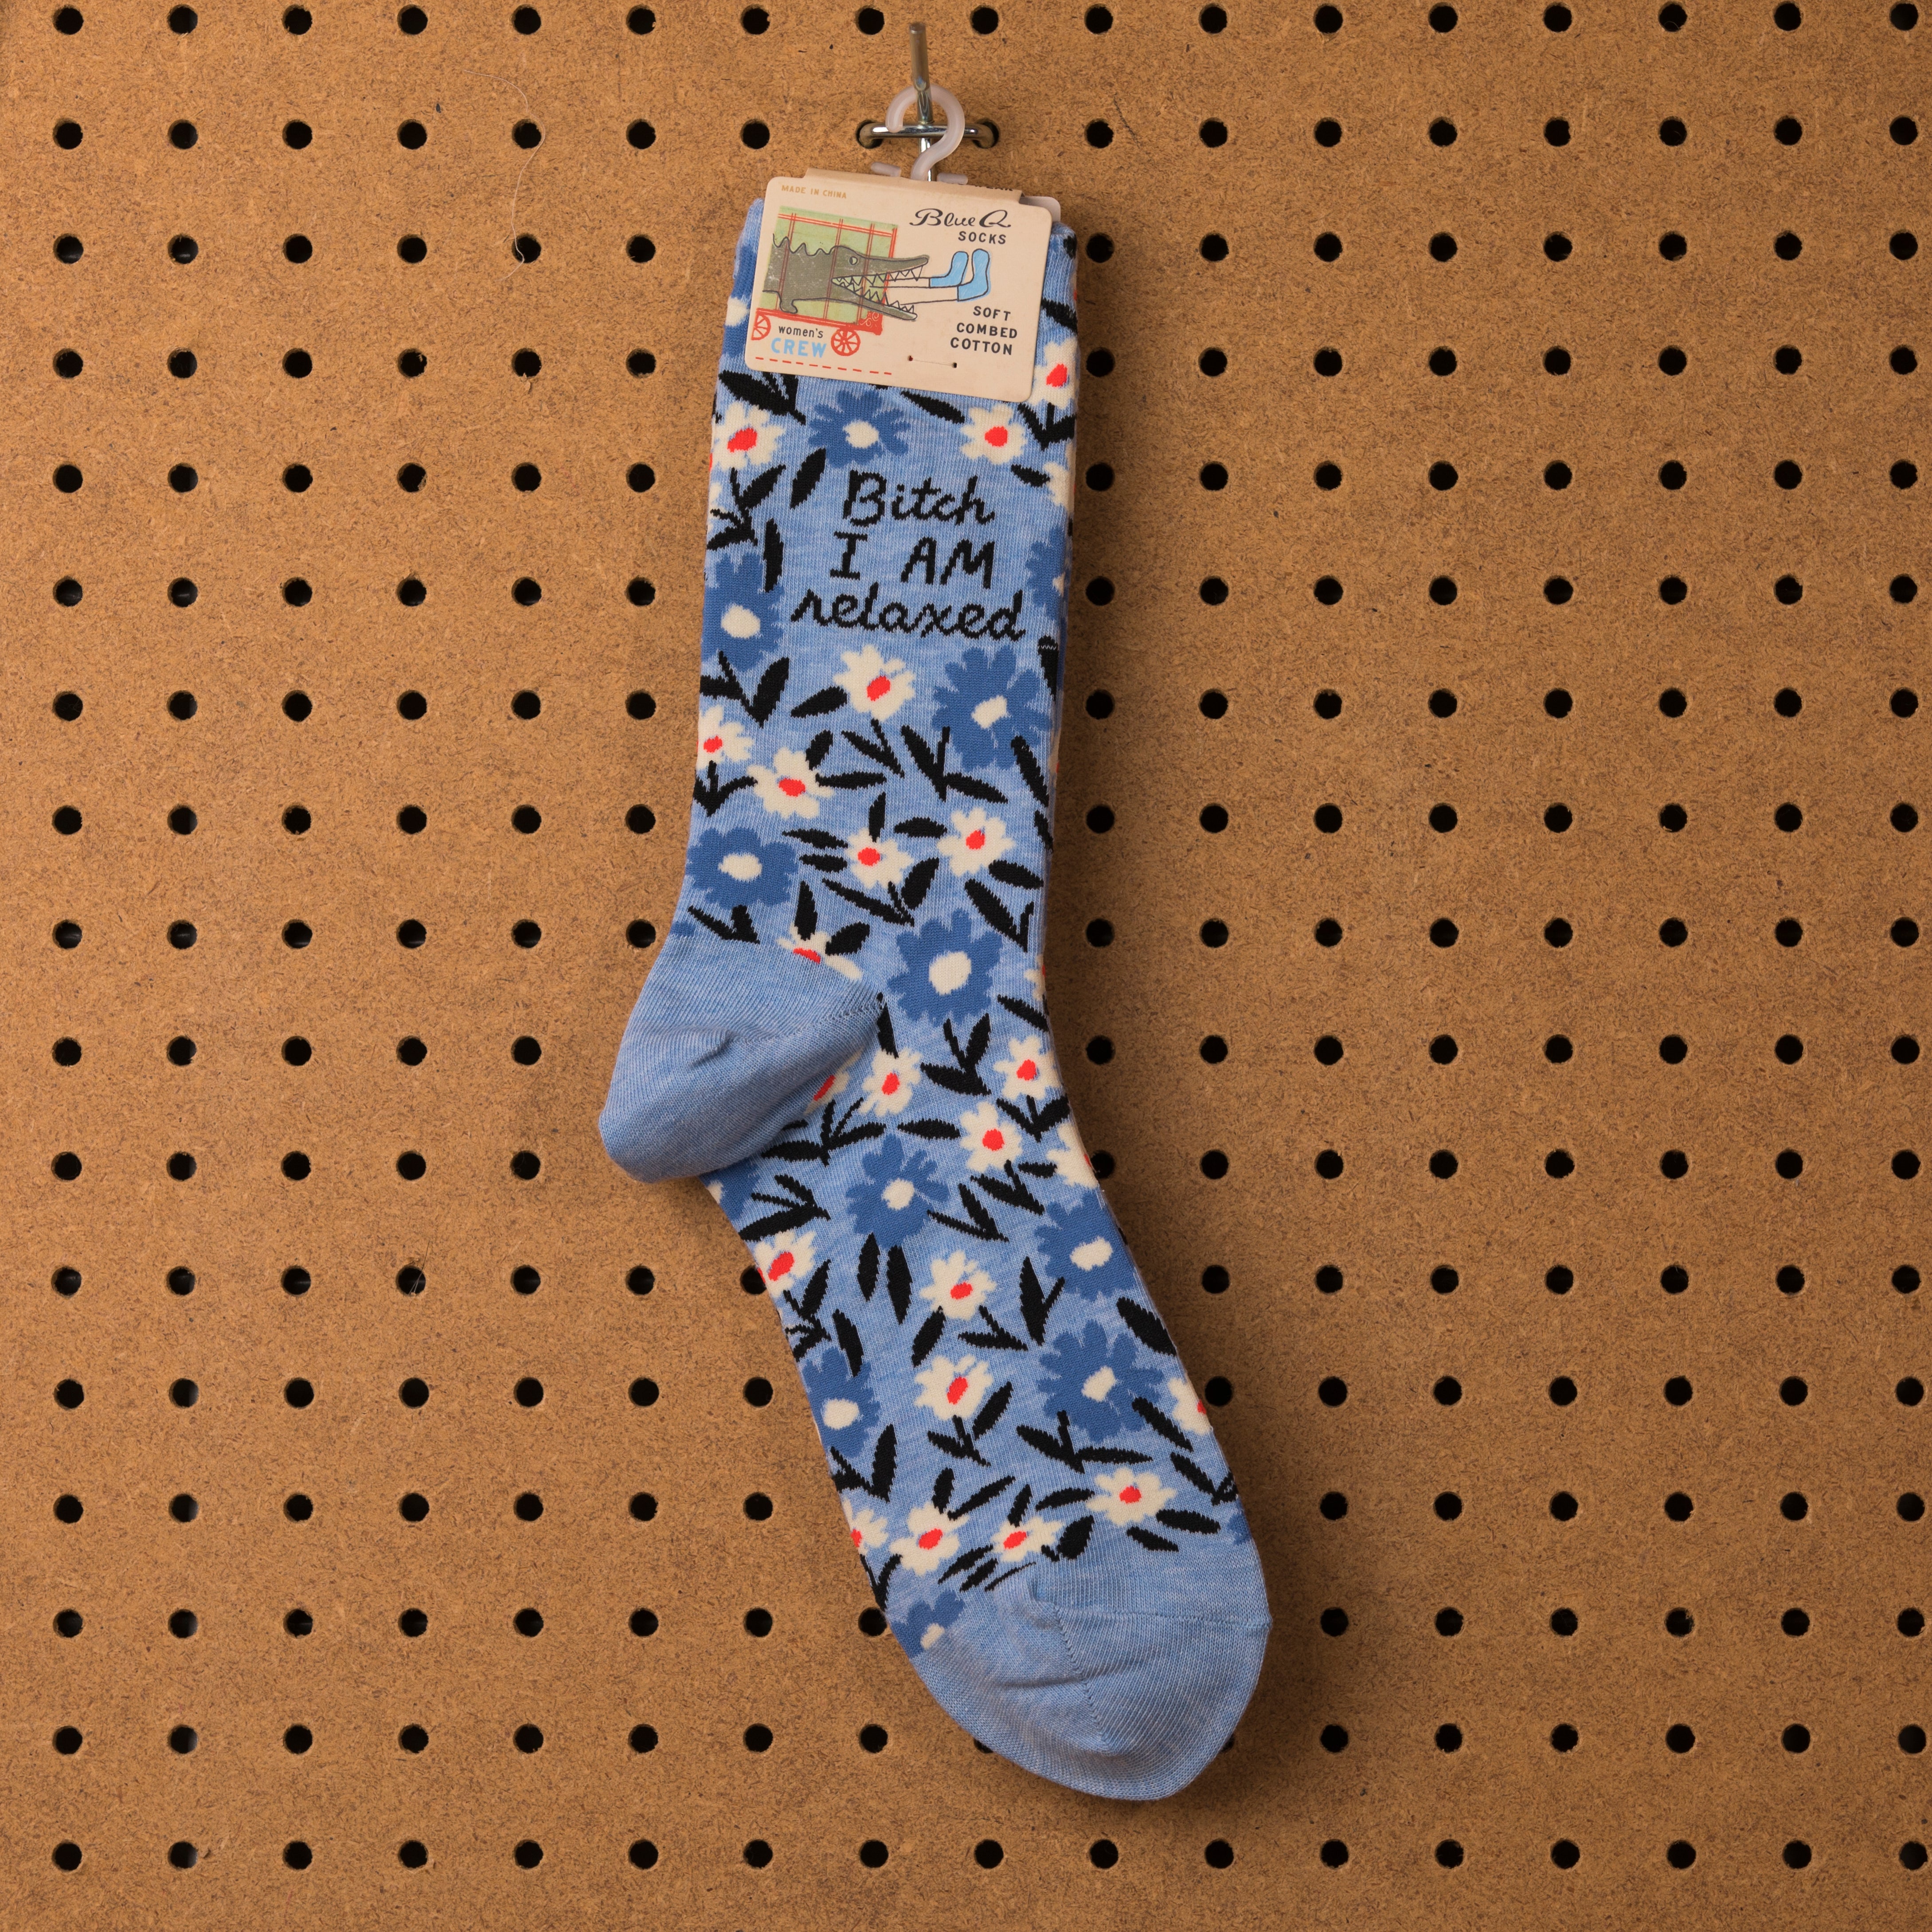 Blue Q Bitch I Am Relaxed Socks - Women's Socks  - Women's Clothing Store - Women's Accessories - Ladies Boutique - O KOO RAN - Big Bear Lake California